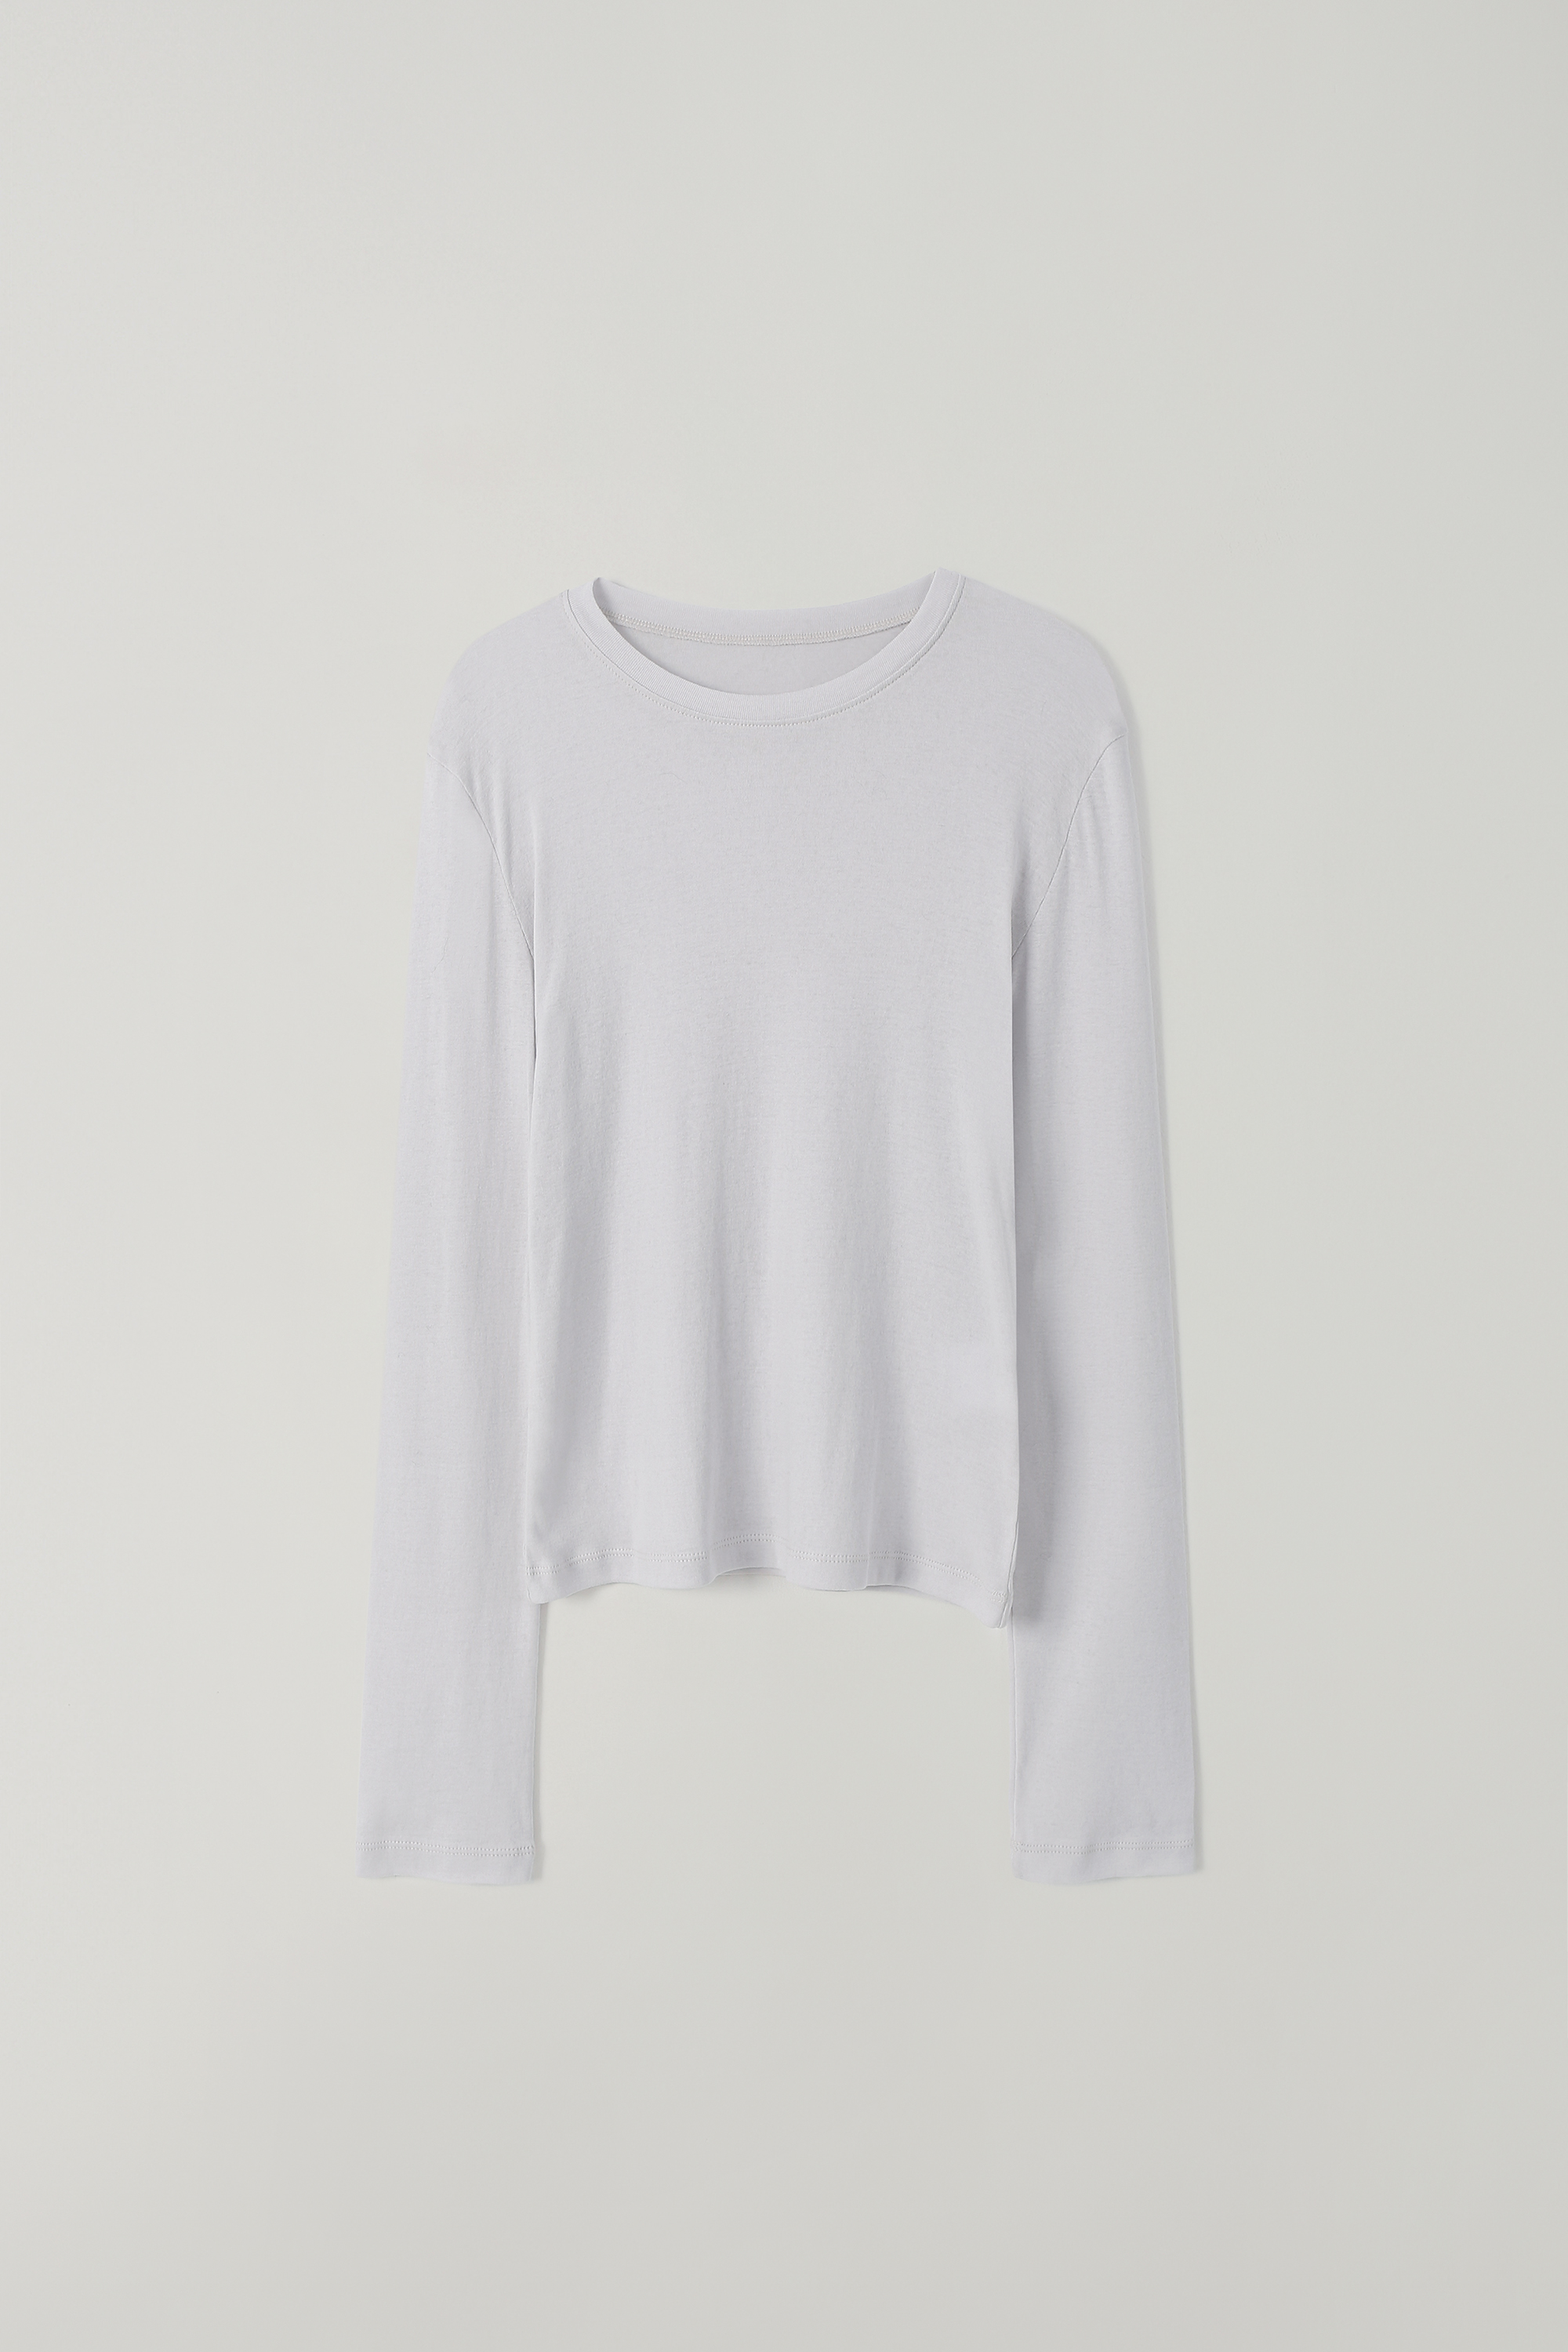 (3rd re-stock) T/T Pastel soft t-shirt (lavender)